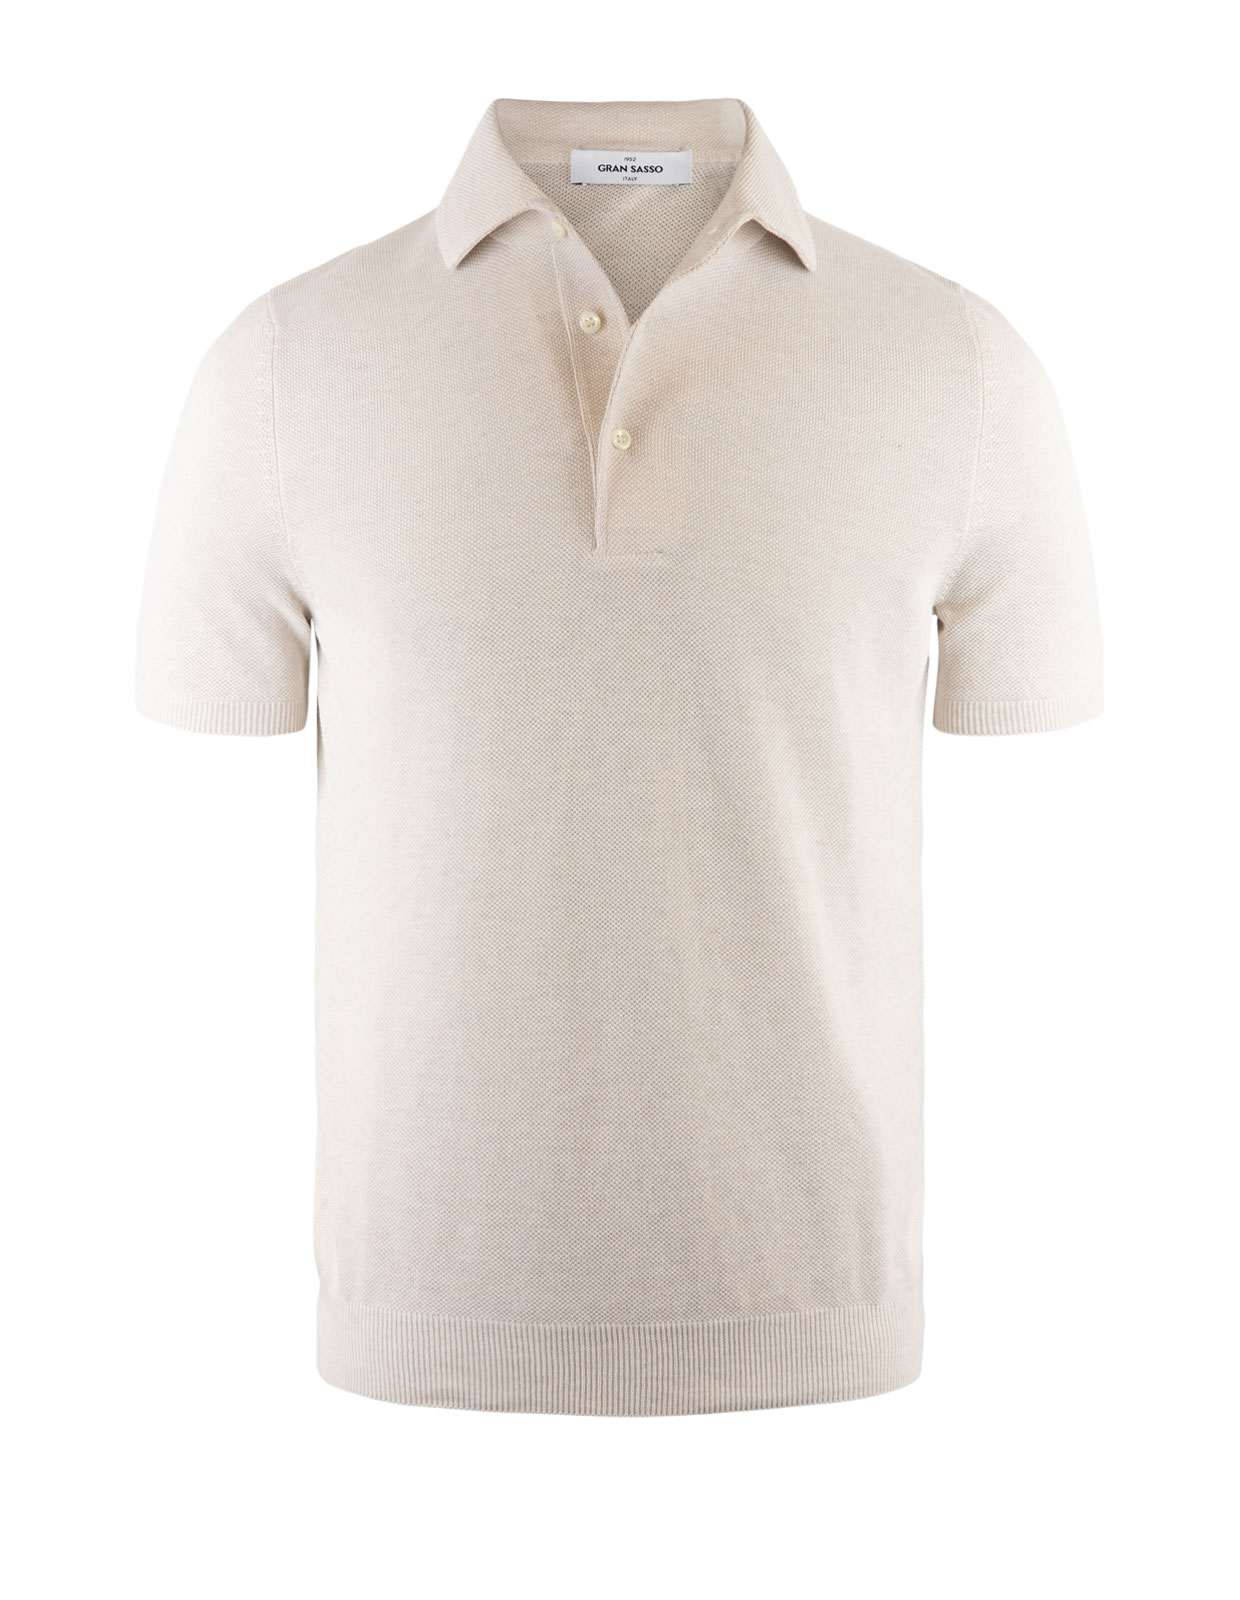 Fresh Cotton Polo Shirt Offwhite